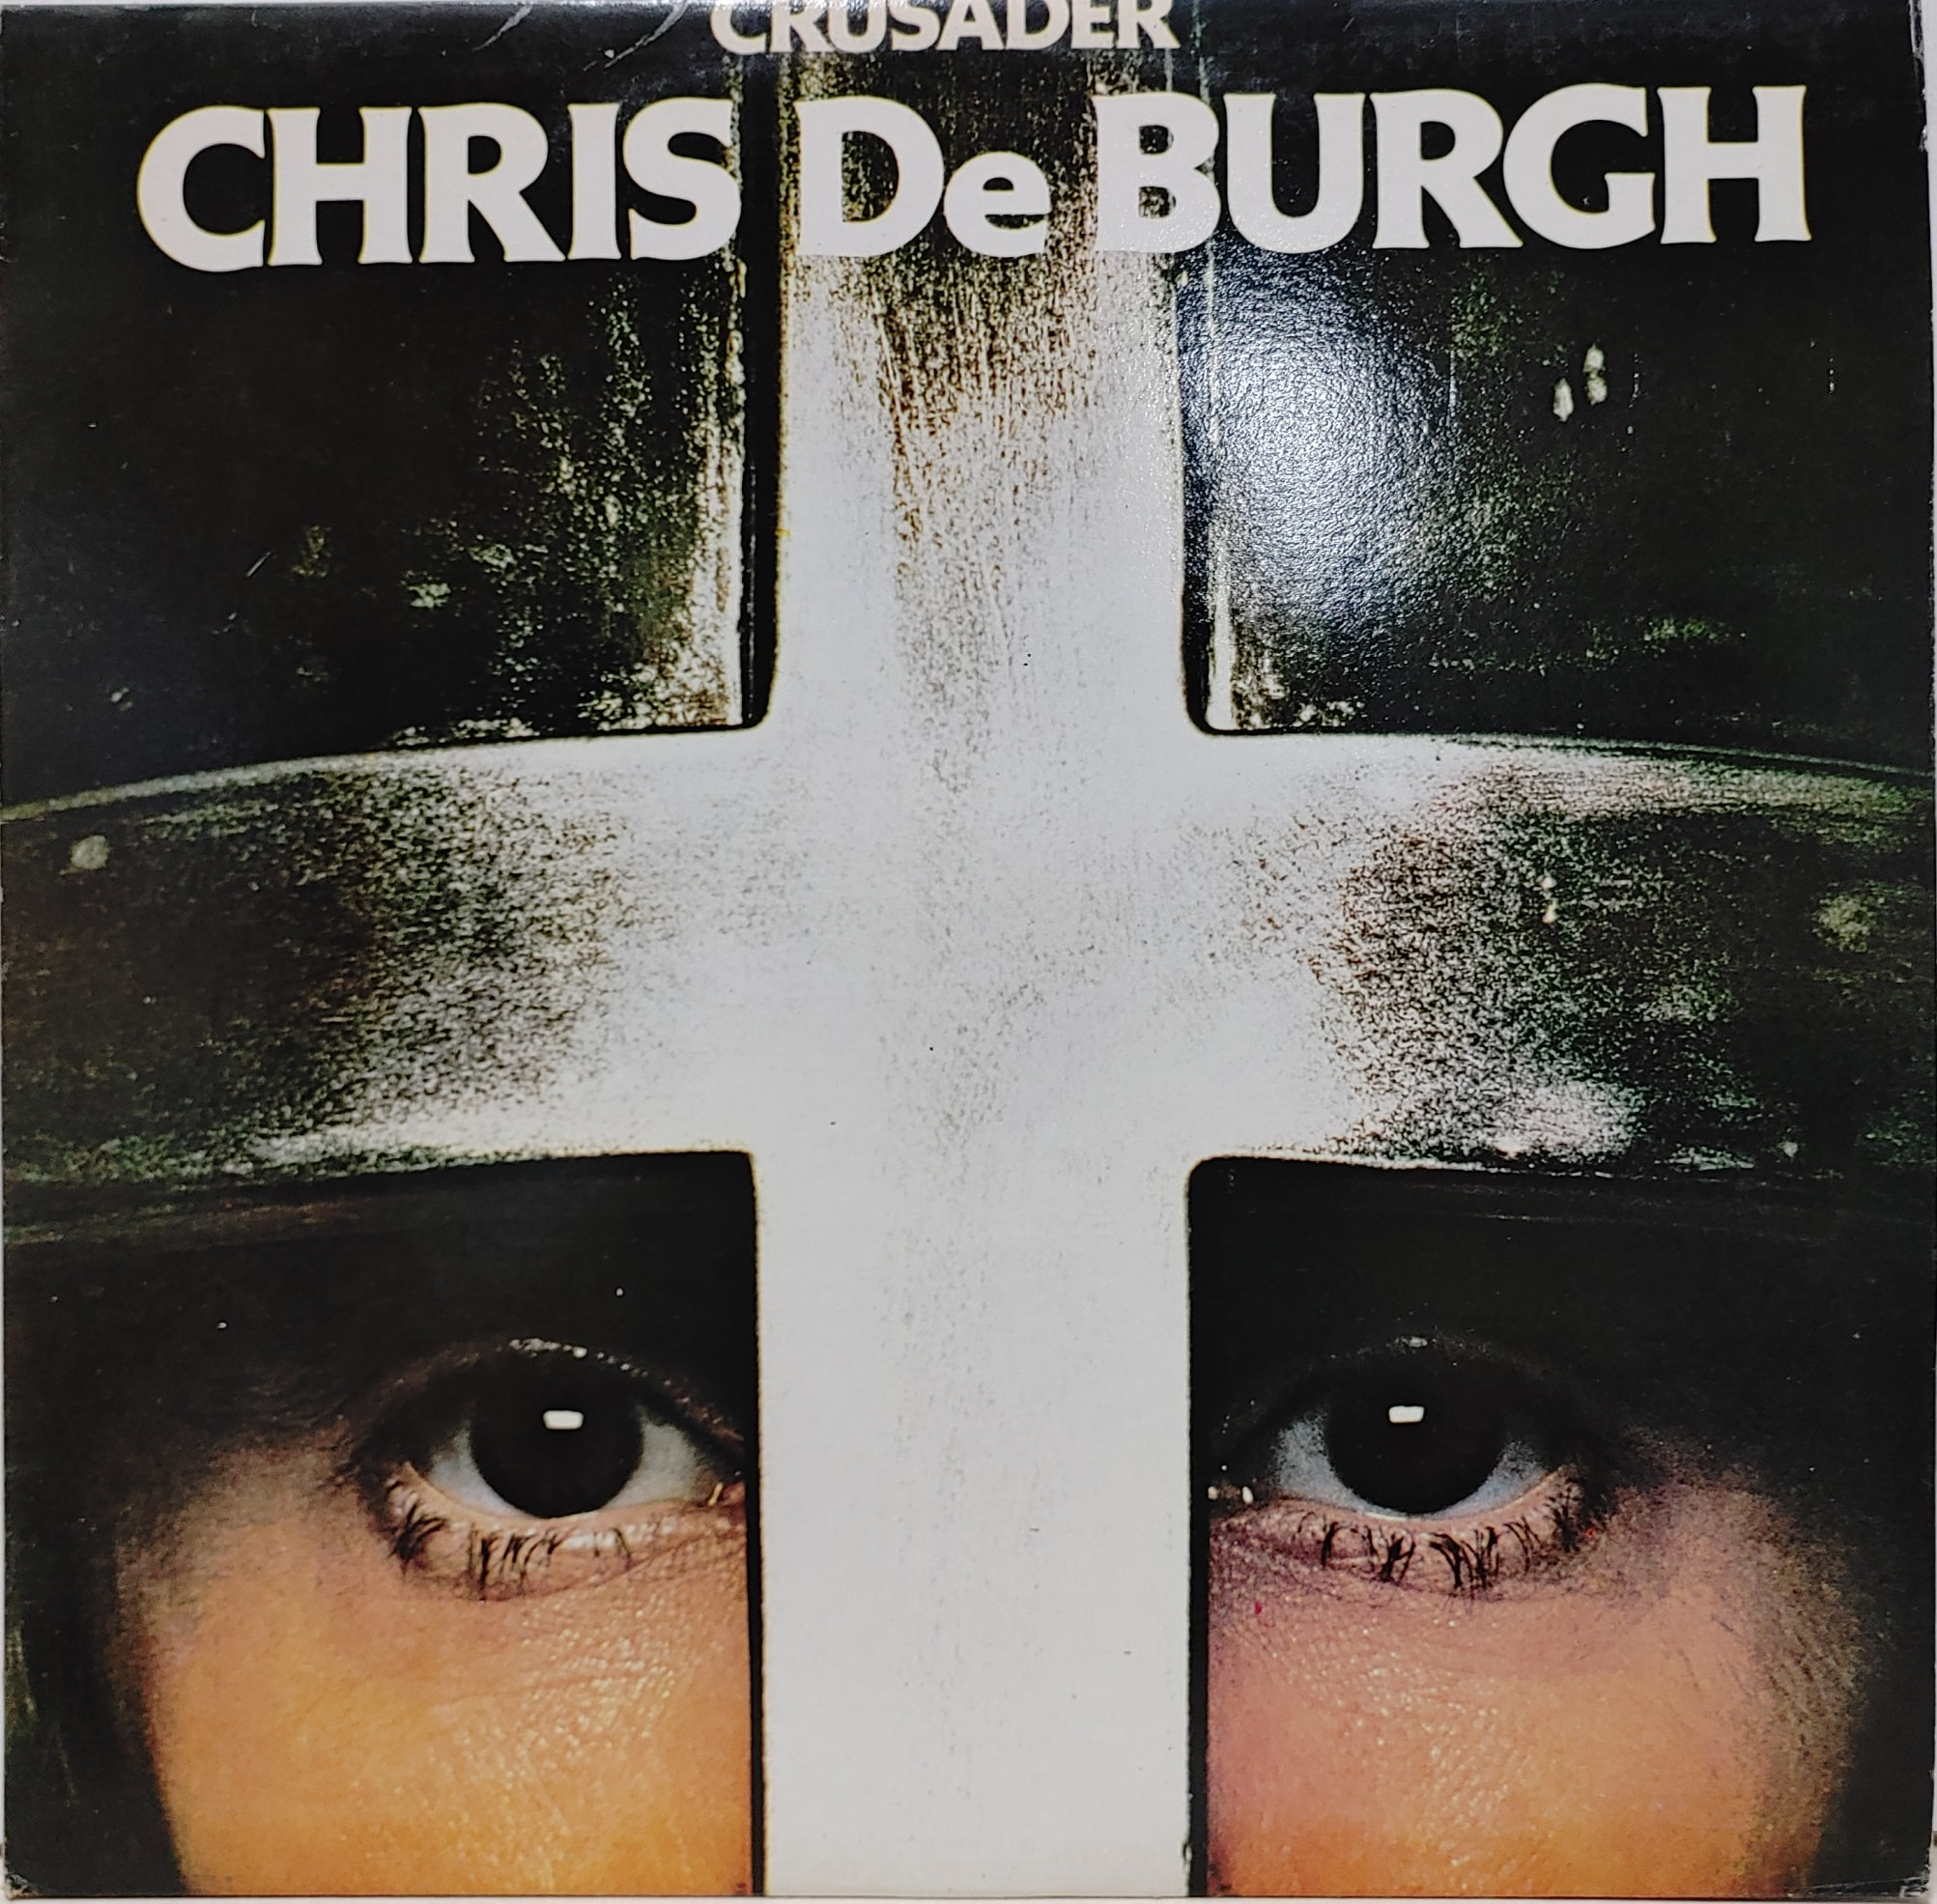 CHRIS DE BURGH / CRUSADER